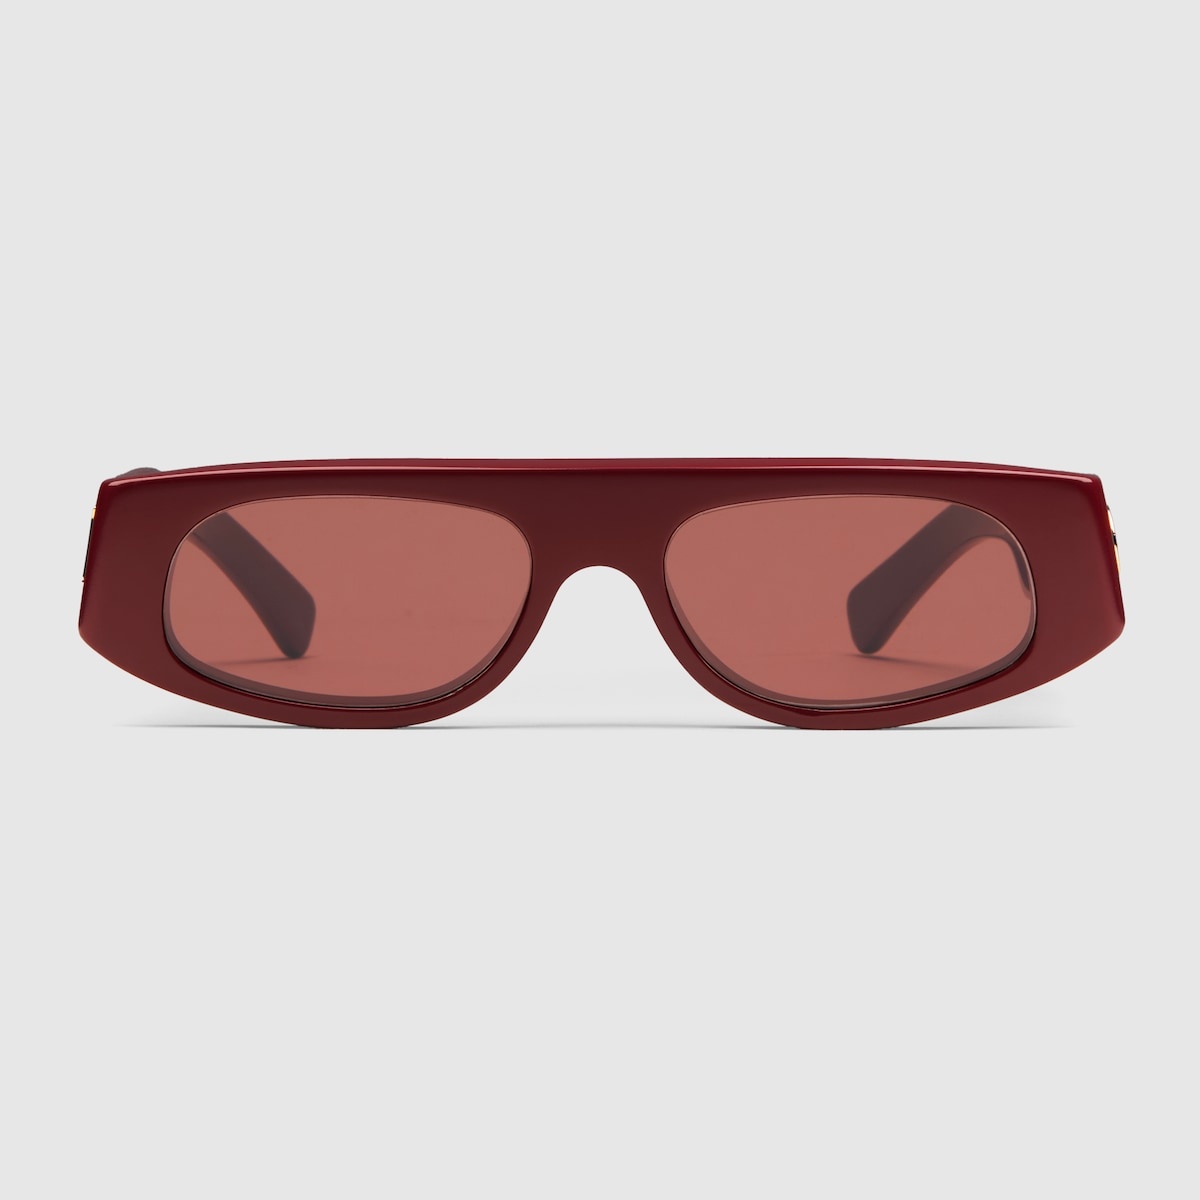 Geometric shaped frame sunglasses - 1